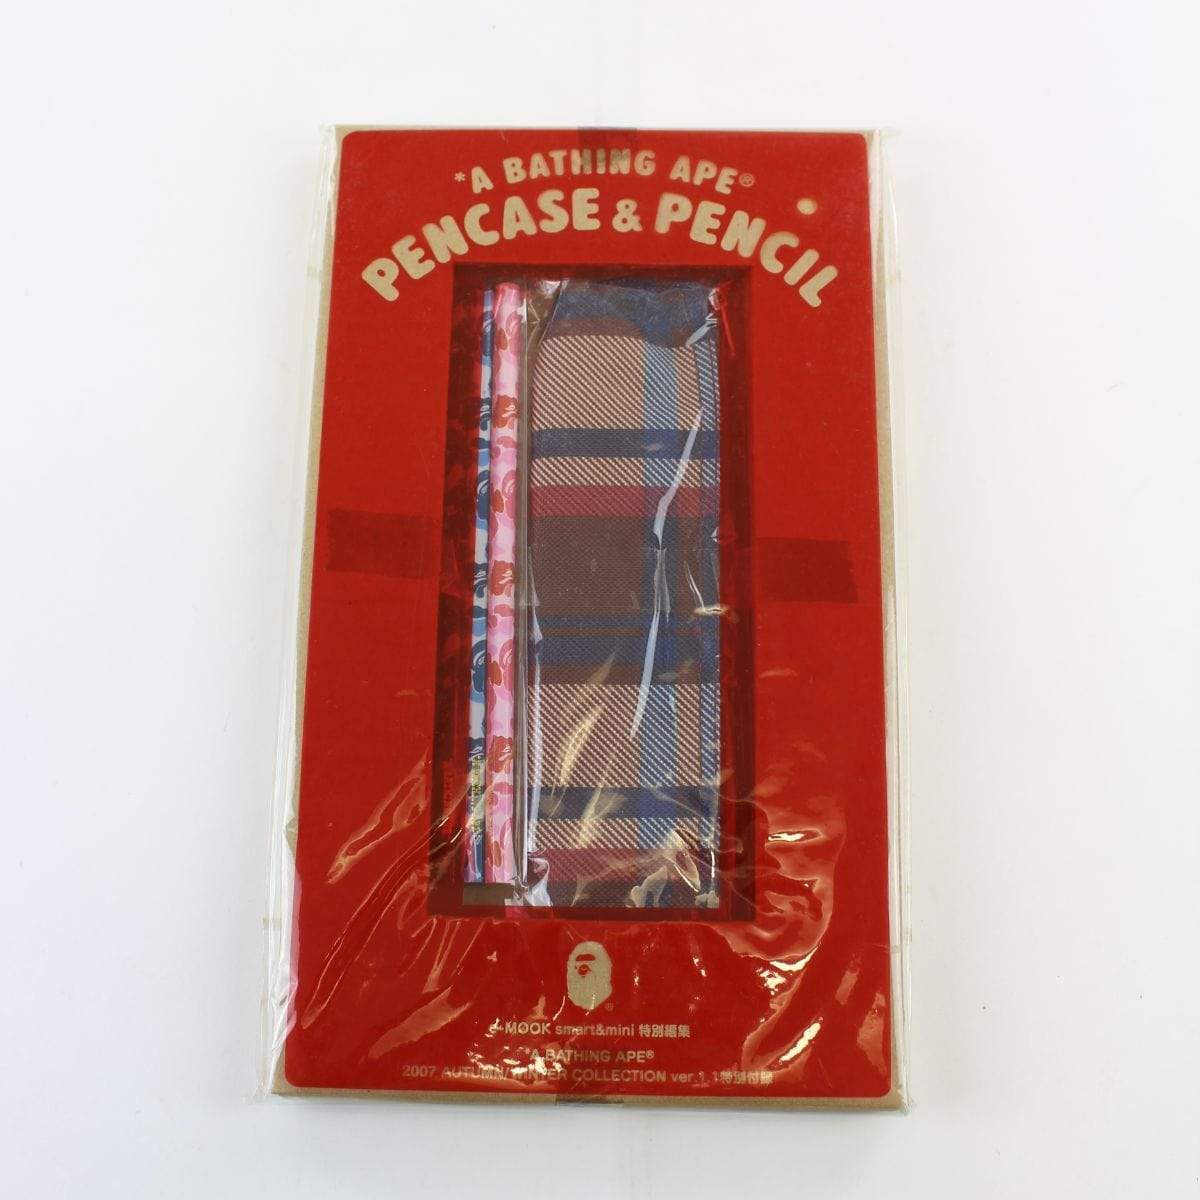 Bape Camo Pencil & Plaid Pencil Case - SaruGeneral